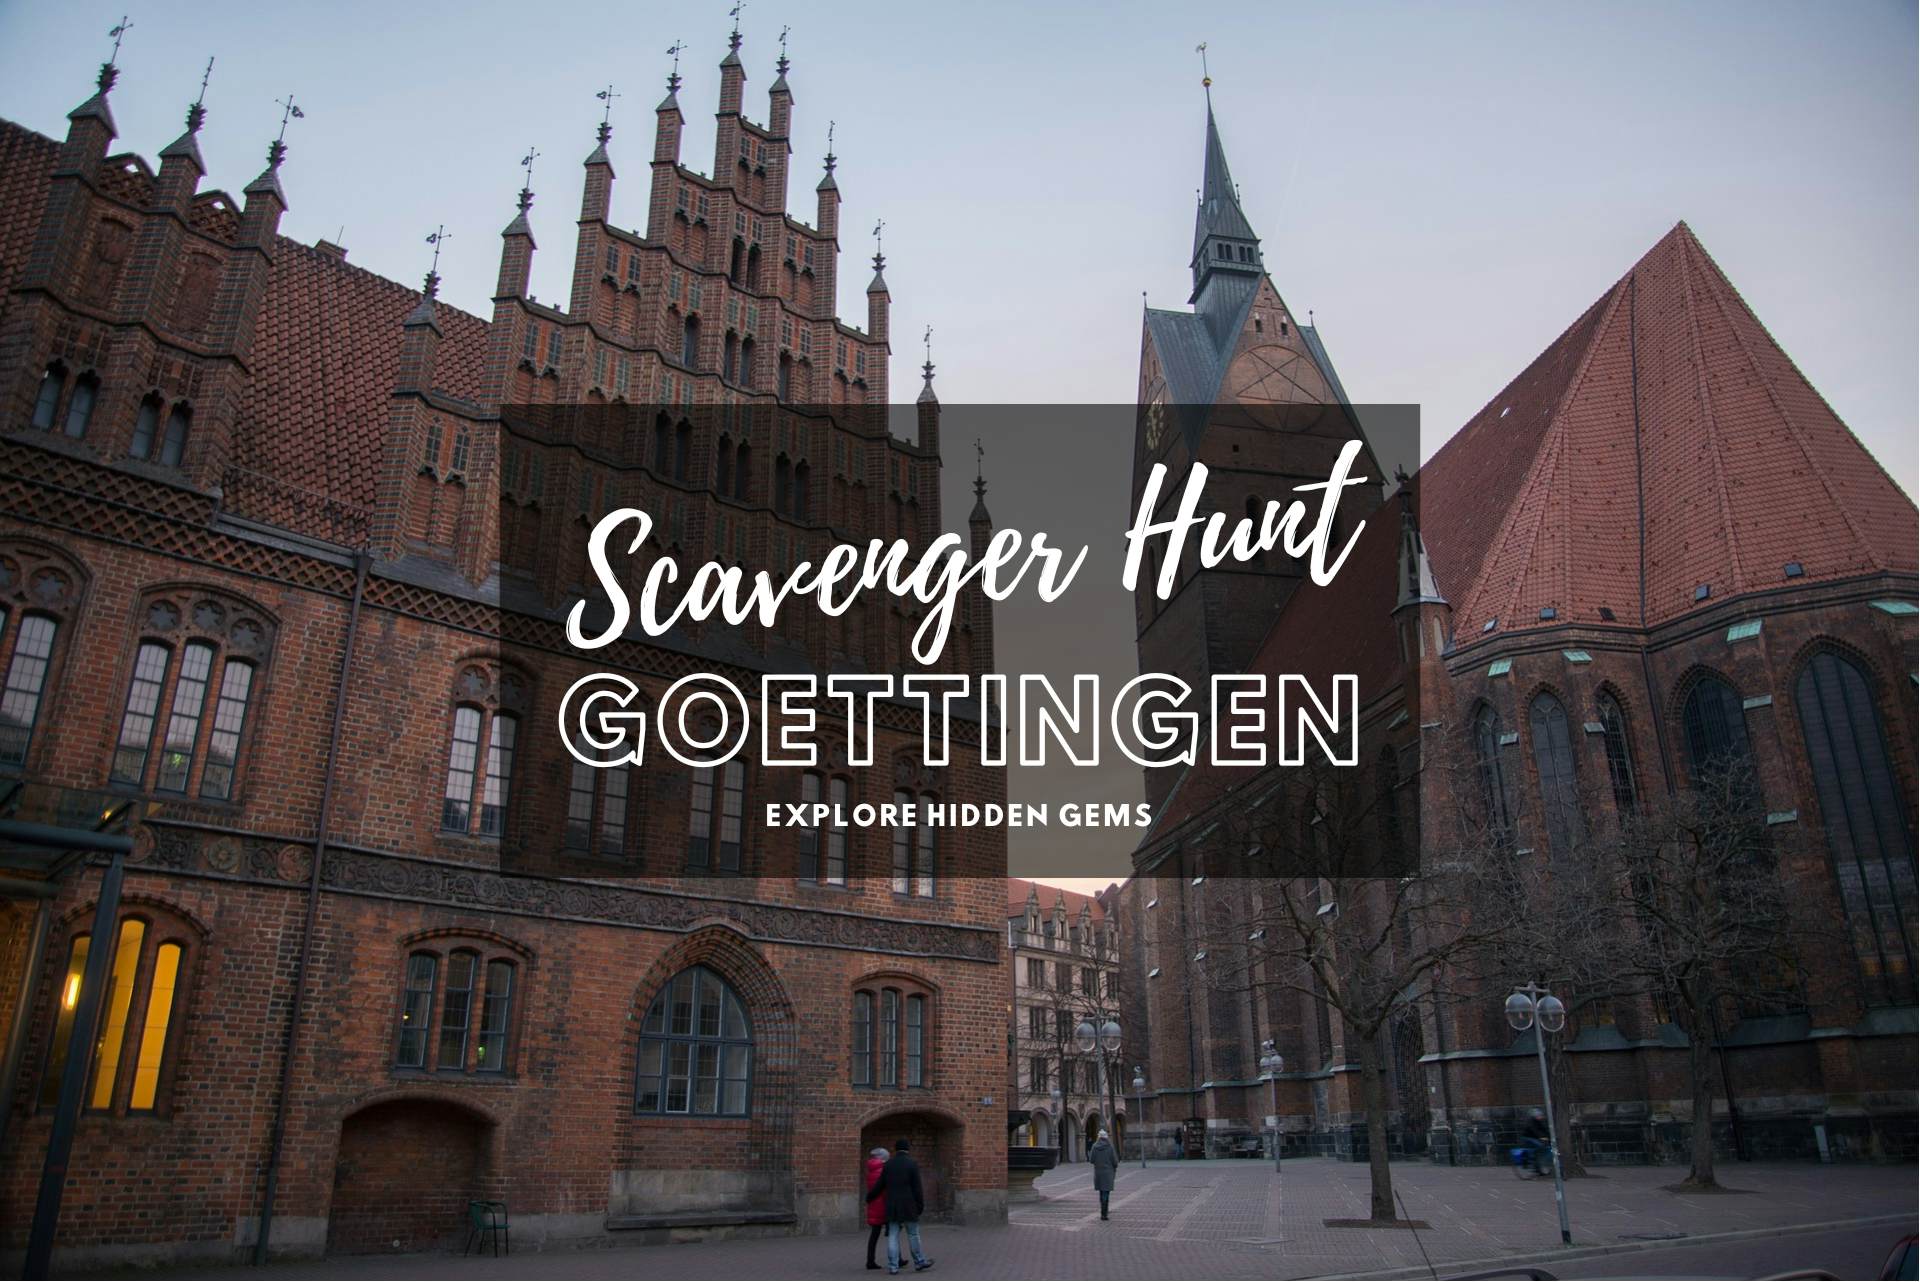 Scavenger Hunt Göttingen - Explore hidden gems image